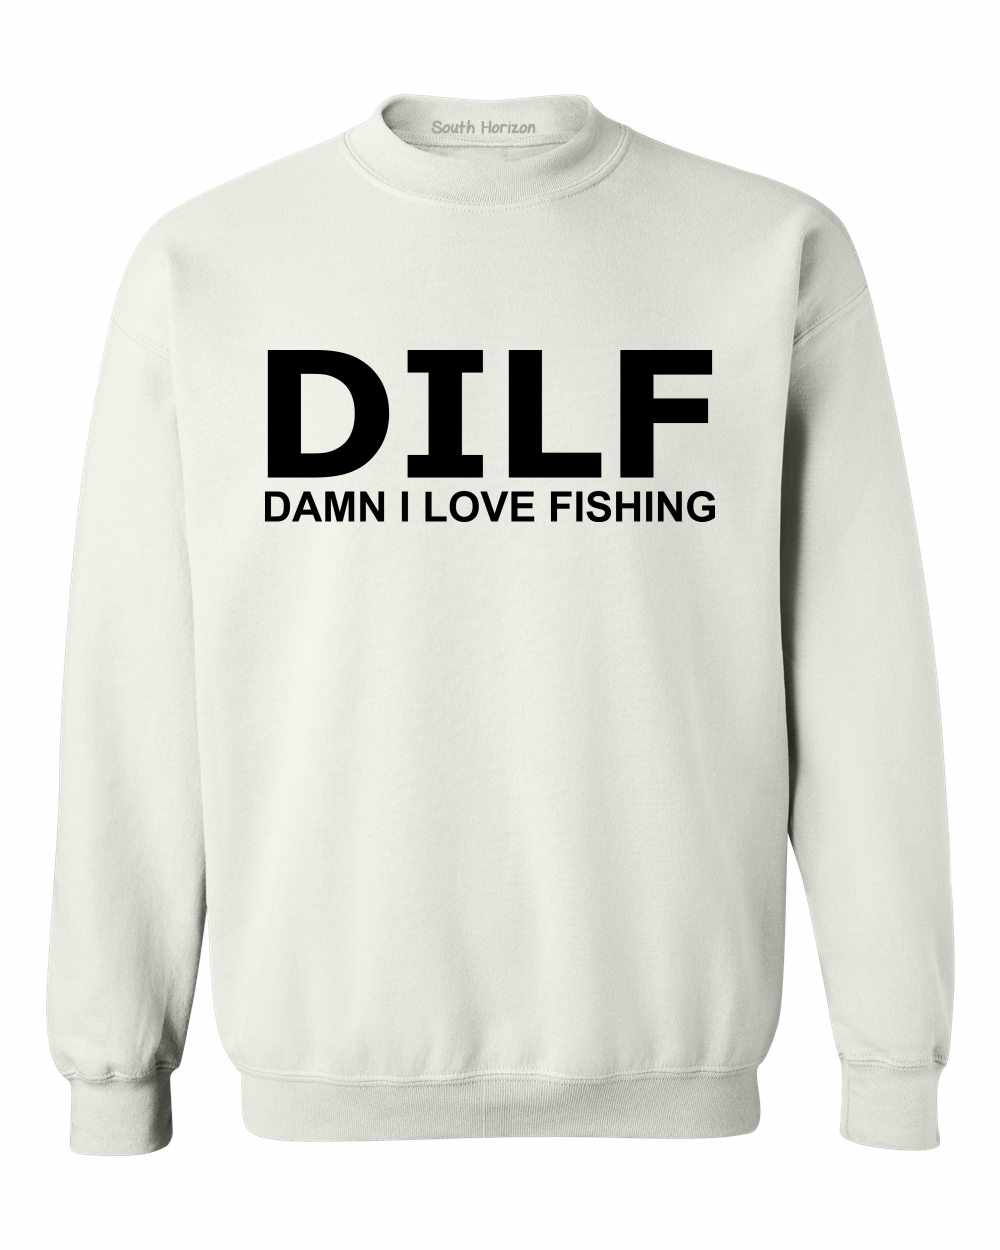 DILF Damn I Love Fishing on SweatShirt in 9 colors – South Horizon